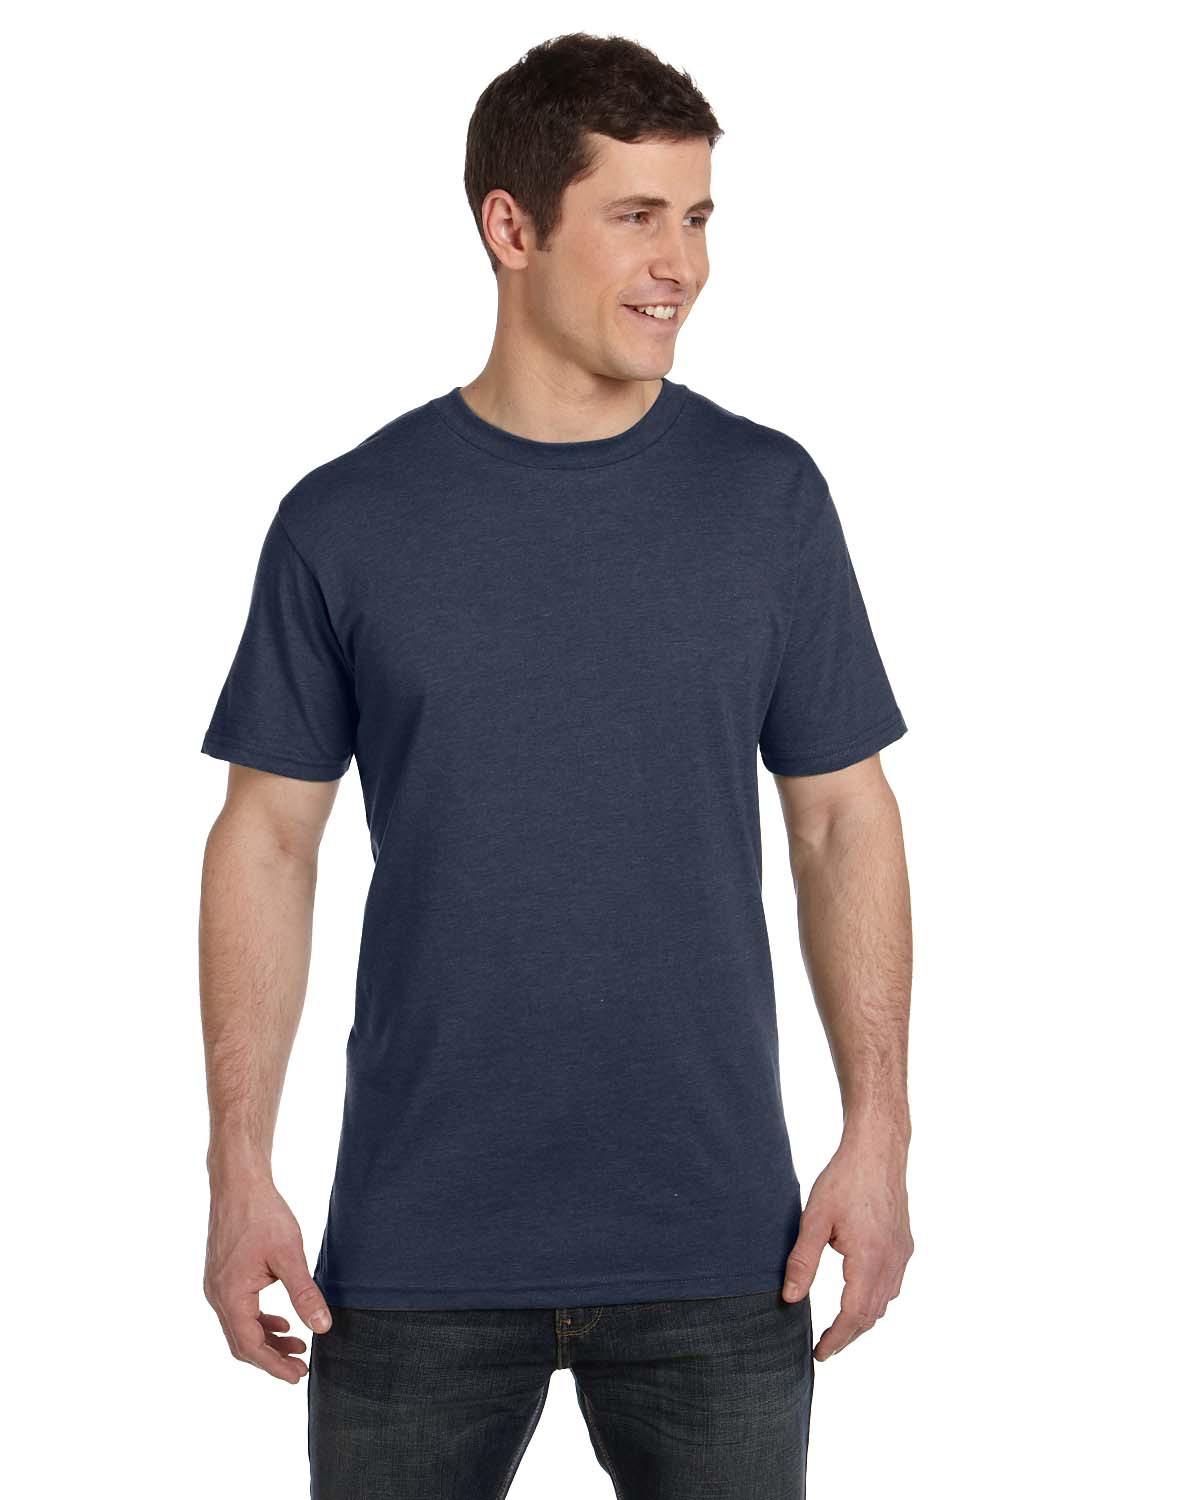 Econscious EC1080 - 4.25 oz. Blended Eco T-Shirt